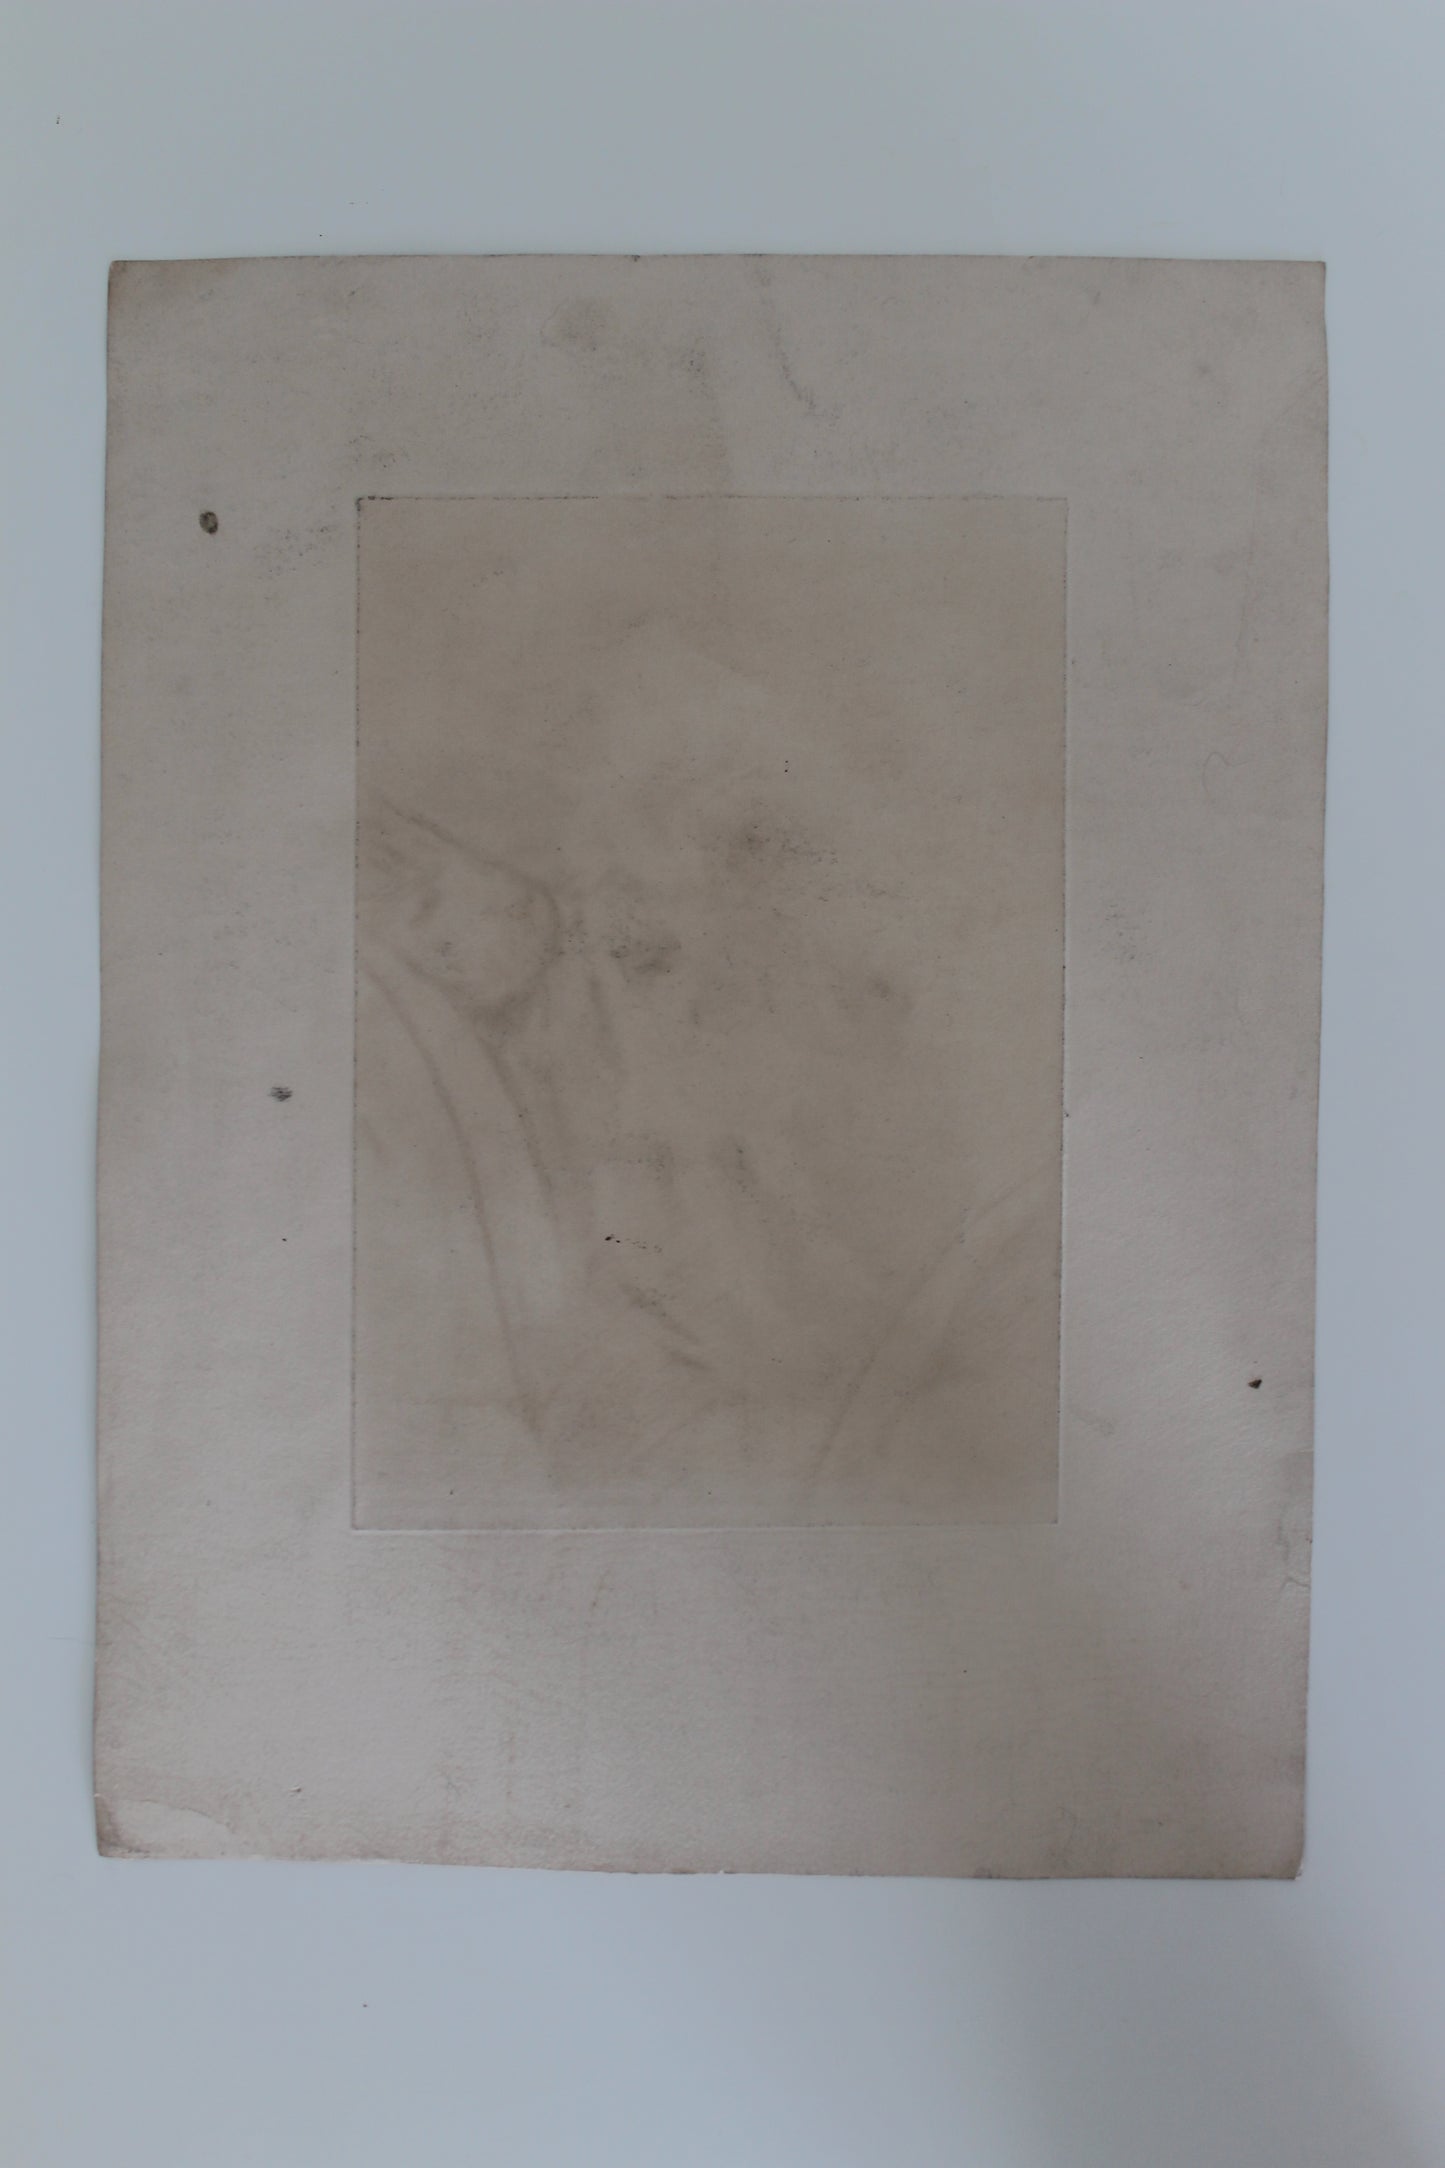 Karl Wagner (1839 - 1929) "jeune fille dans sa calèche" gravure signée manuscritement